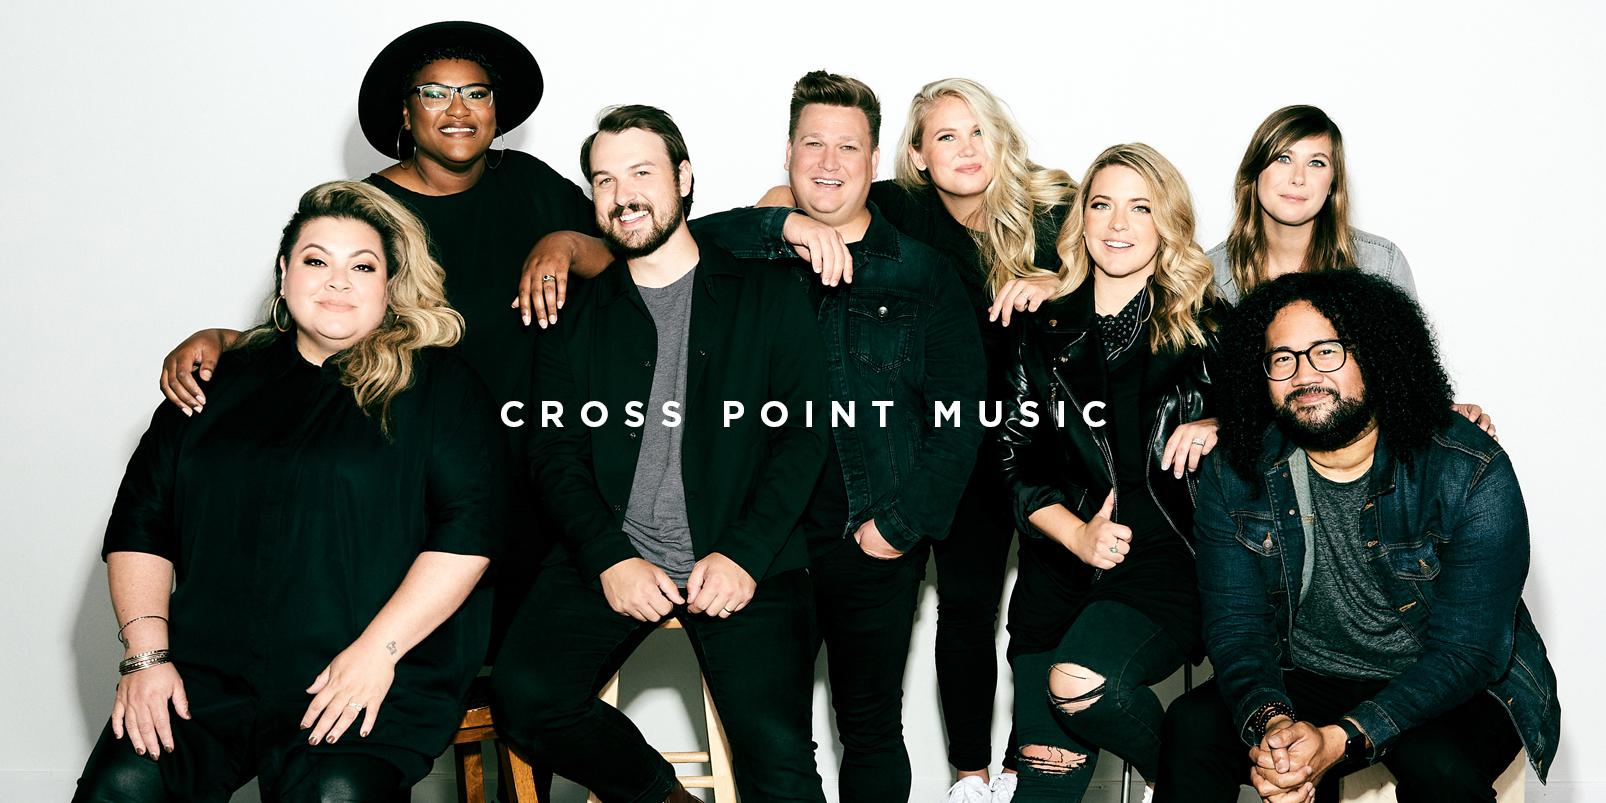 Cross Point Music